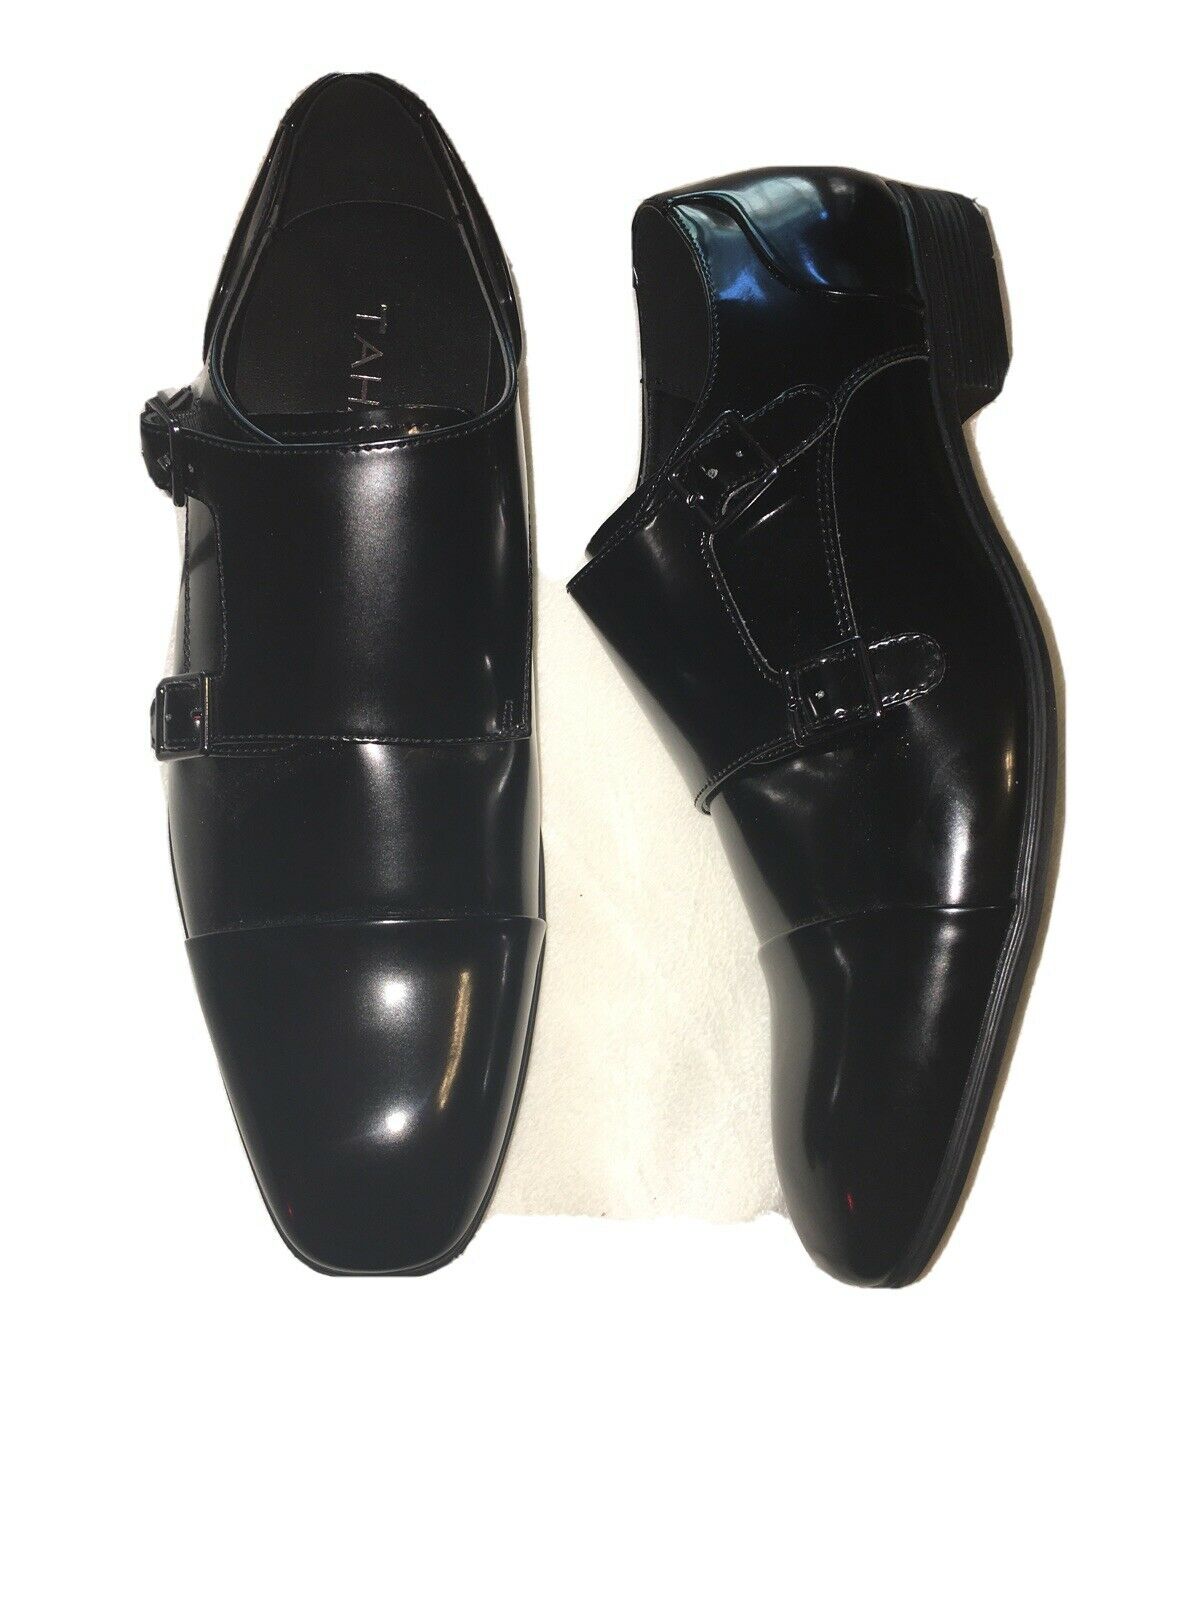 Tahari Men's Dress Shoes Double Monk Strap Faux Vegan Patent Black SZ 12 NEW